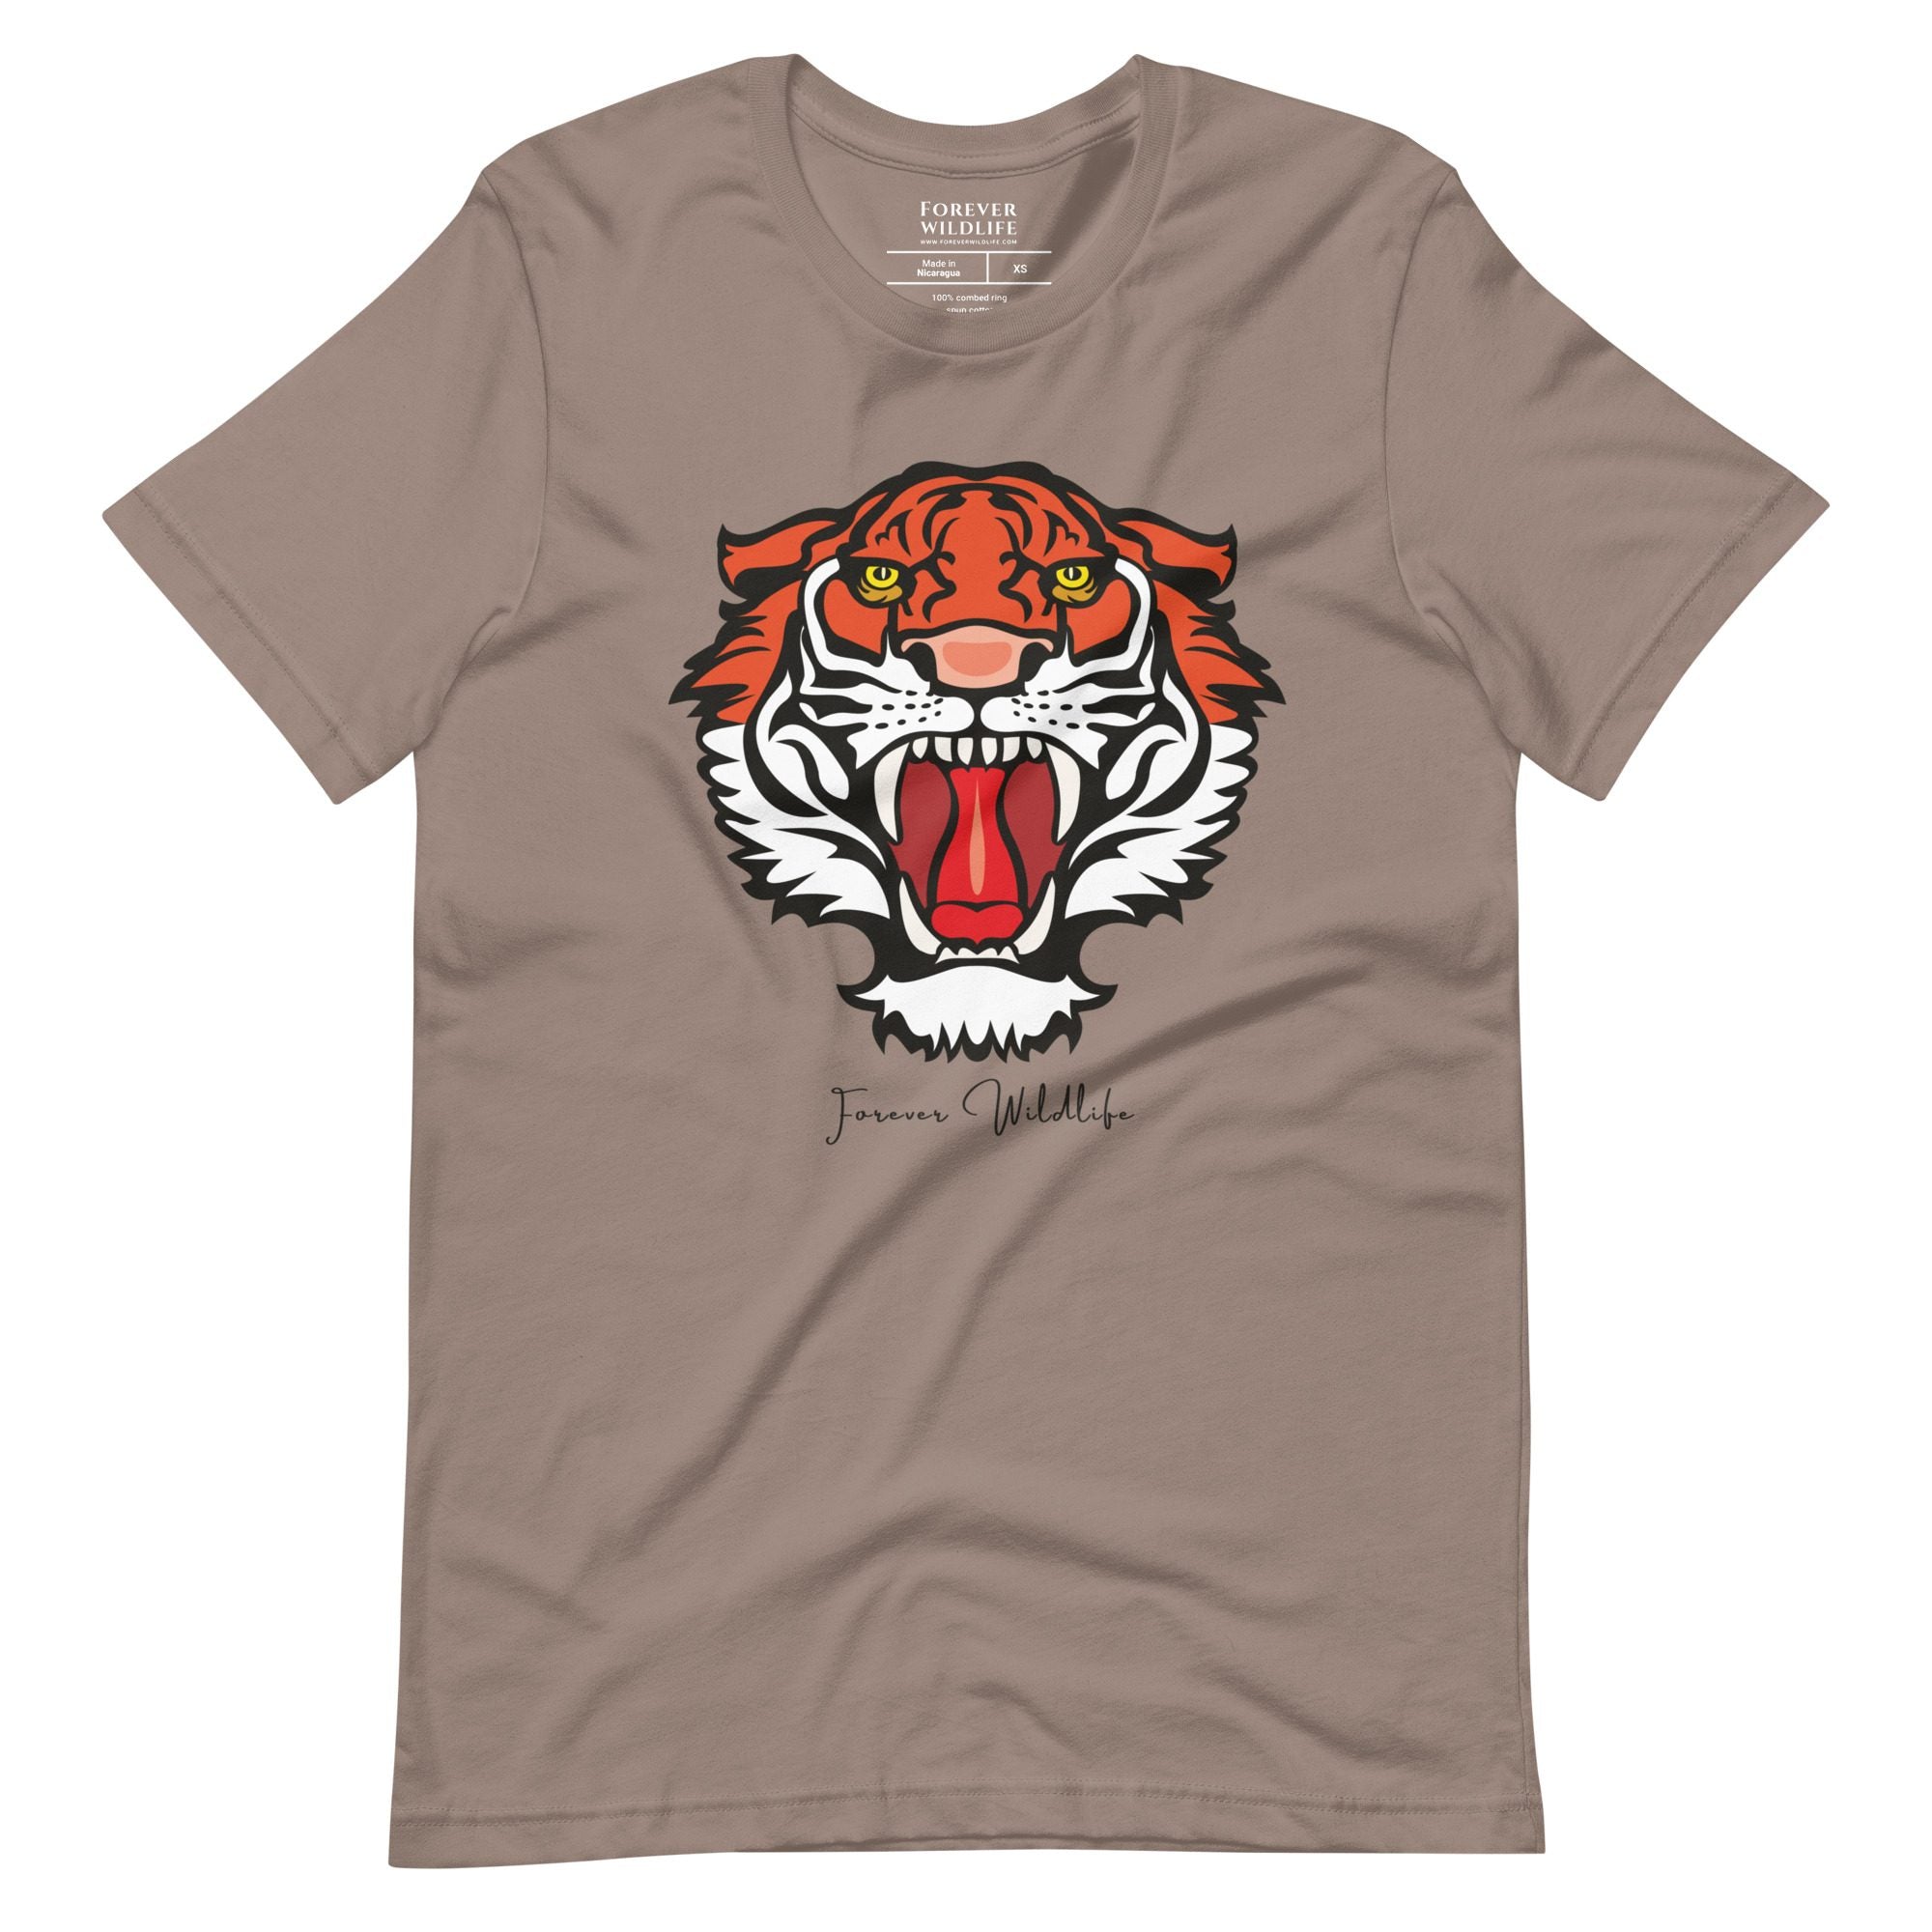 Tiger T-Shirt in Pebble – Premium Wildlife T-Shirt Design, Wildlife Clothing & Apparel from Forever Wildlife